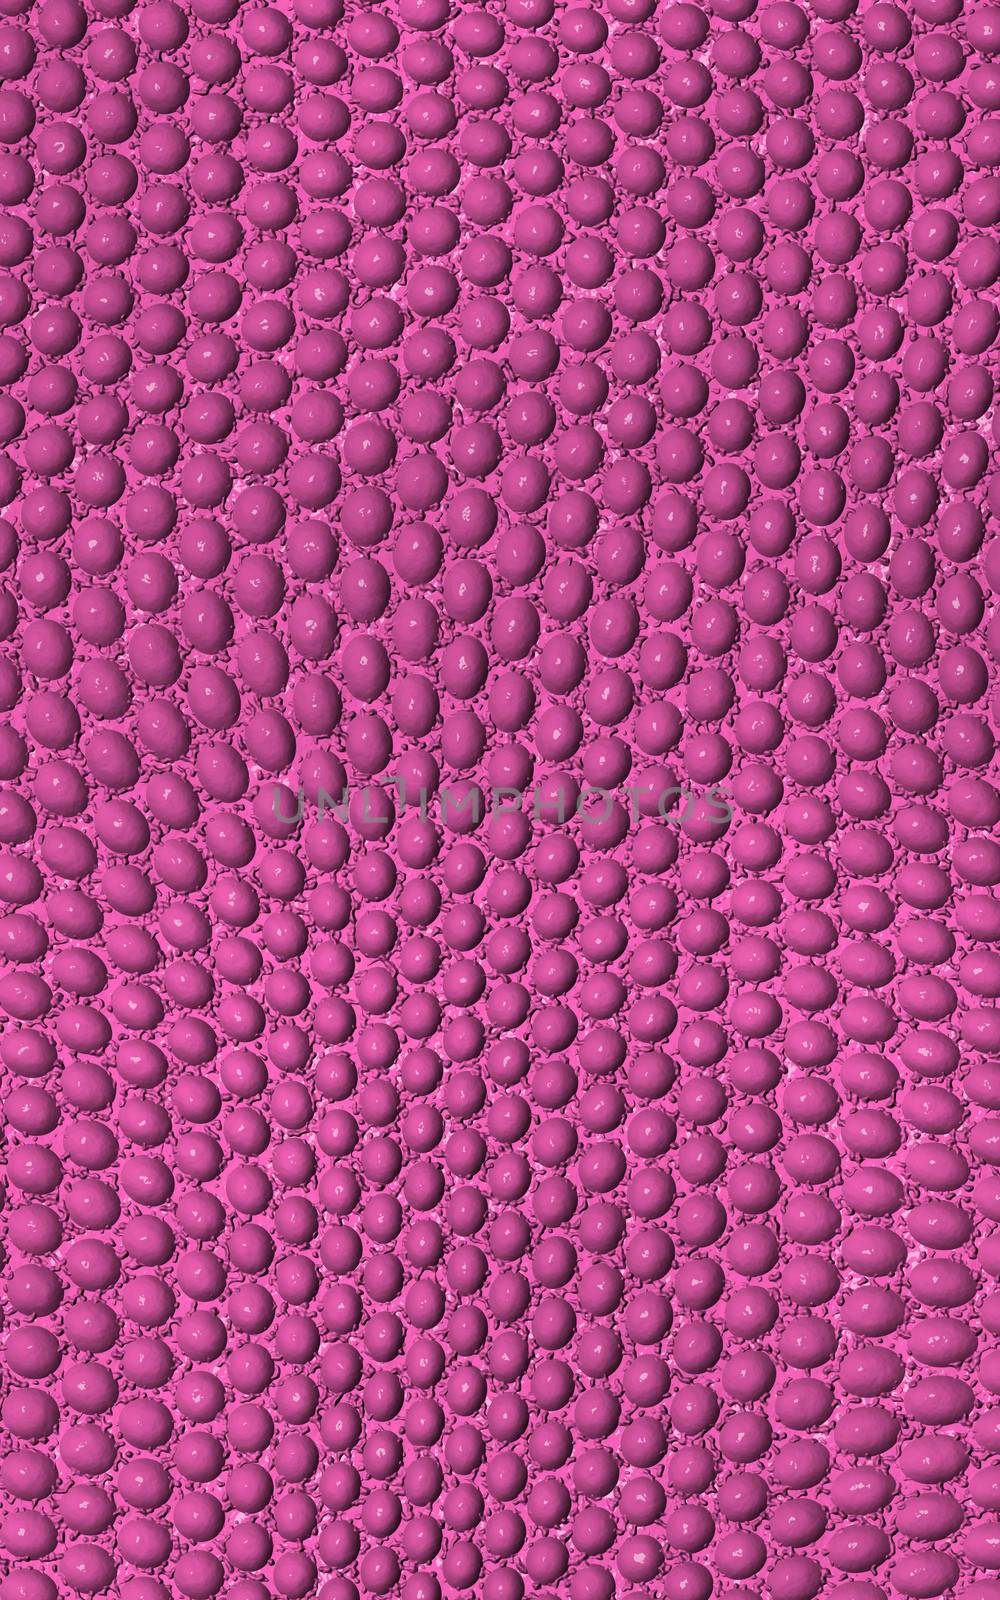 Pink python snake skin texture background by sfinks